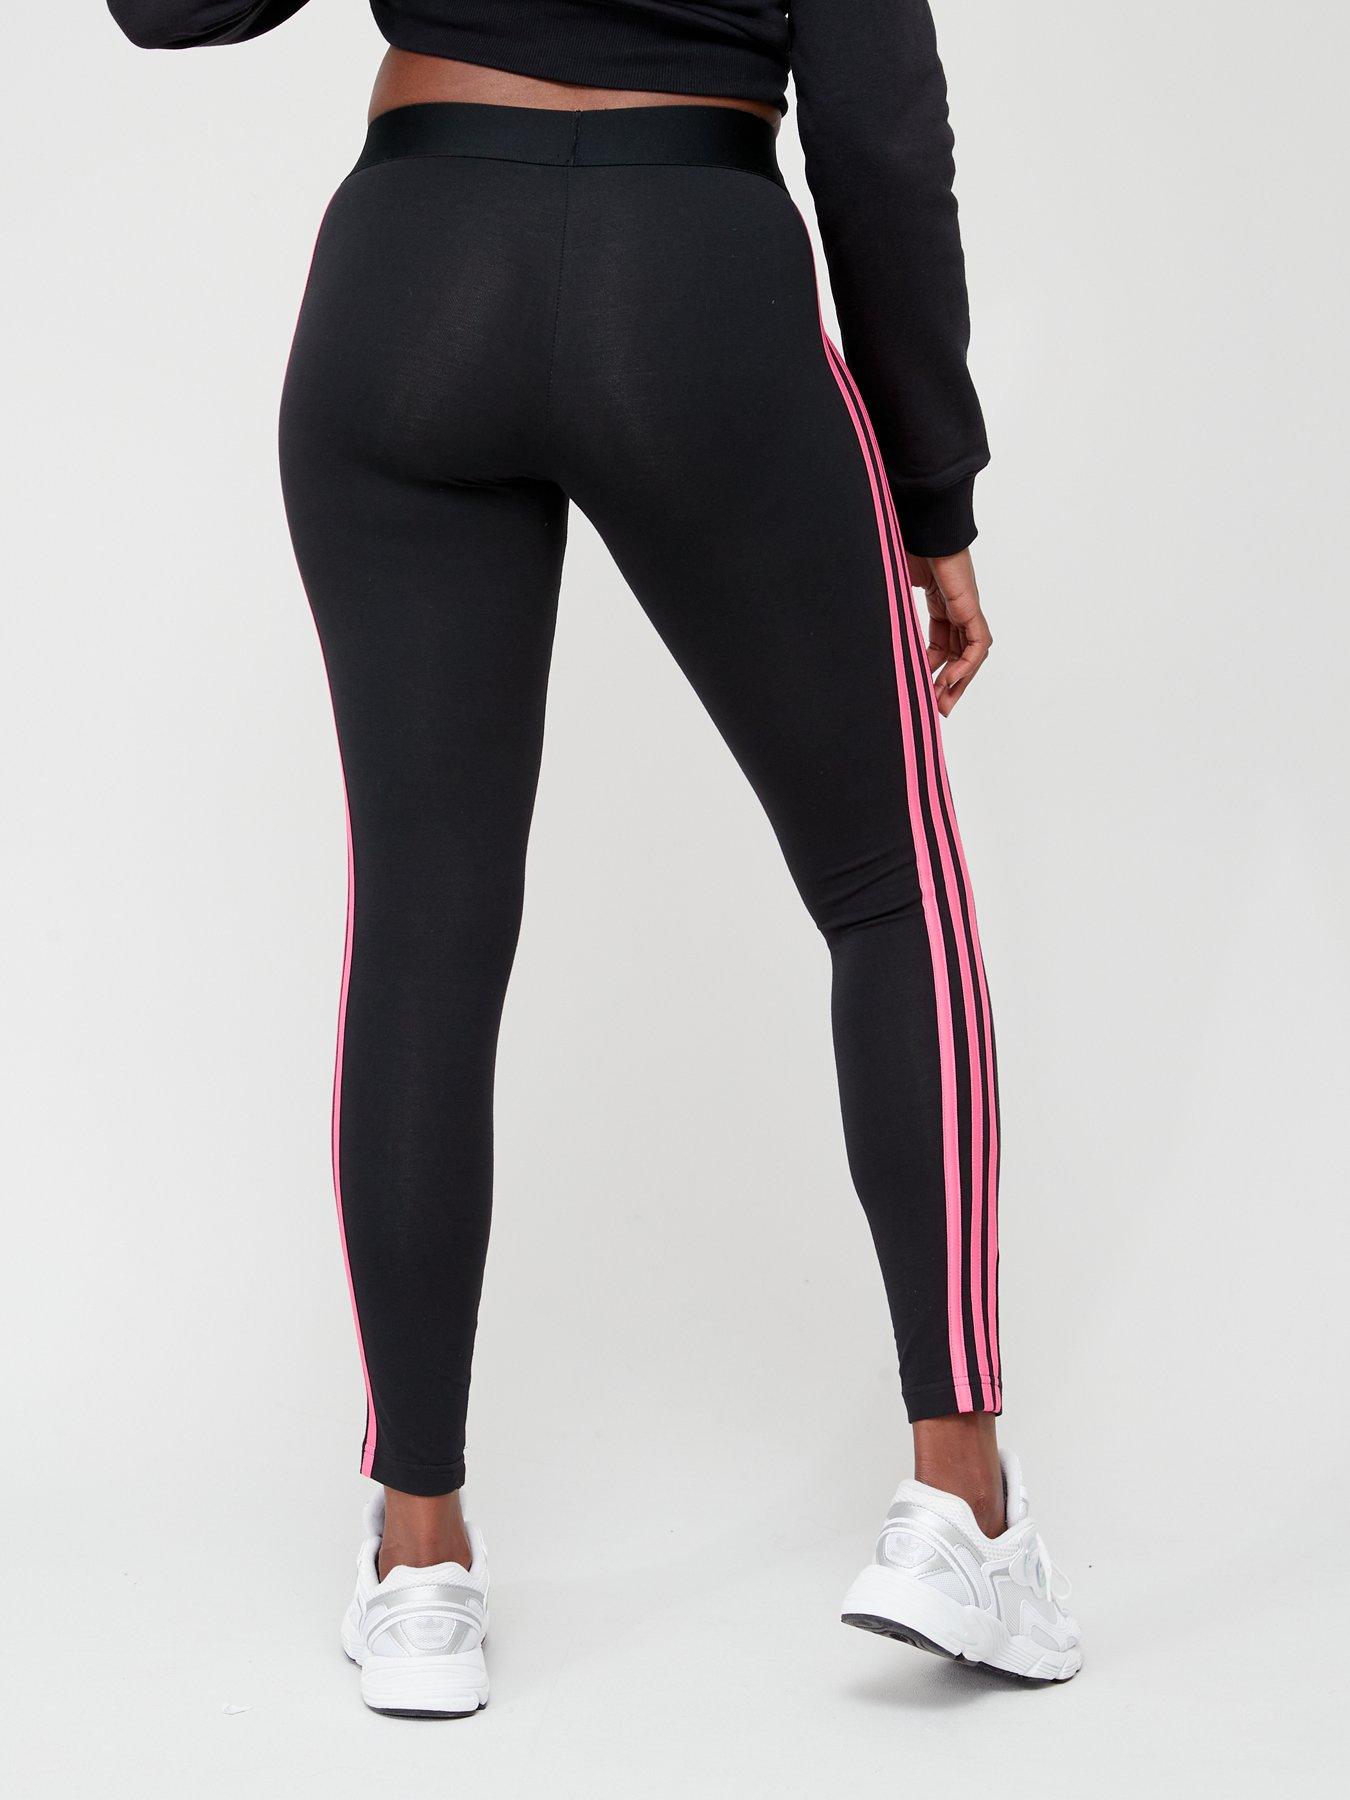 adidas Sportswear Womens 3 Stripe Leggings - Black/Pink